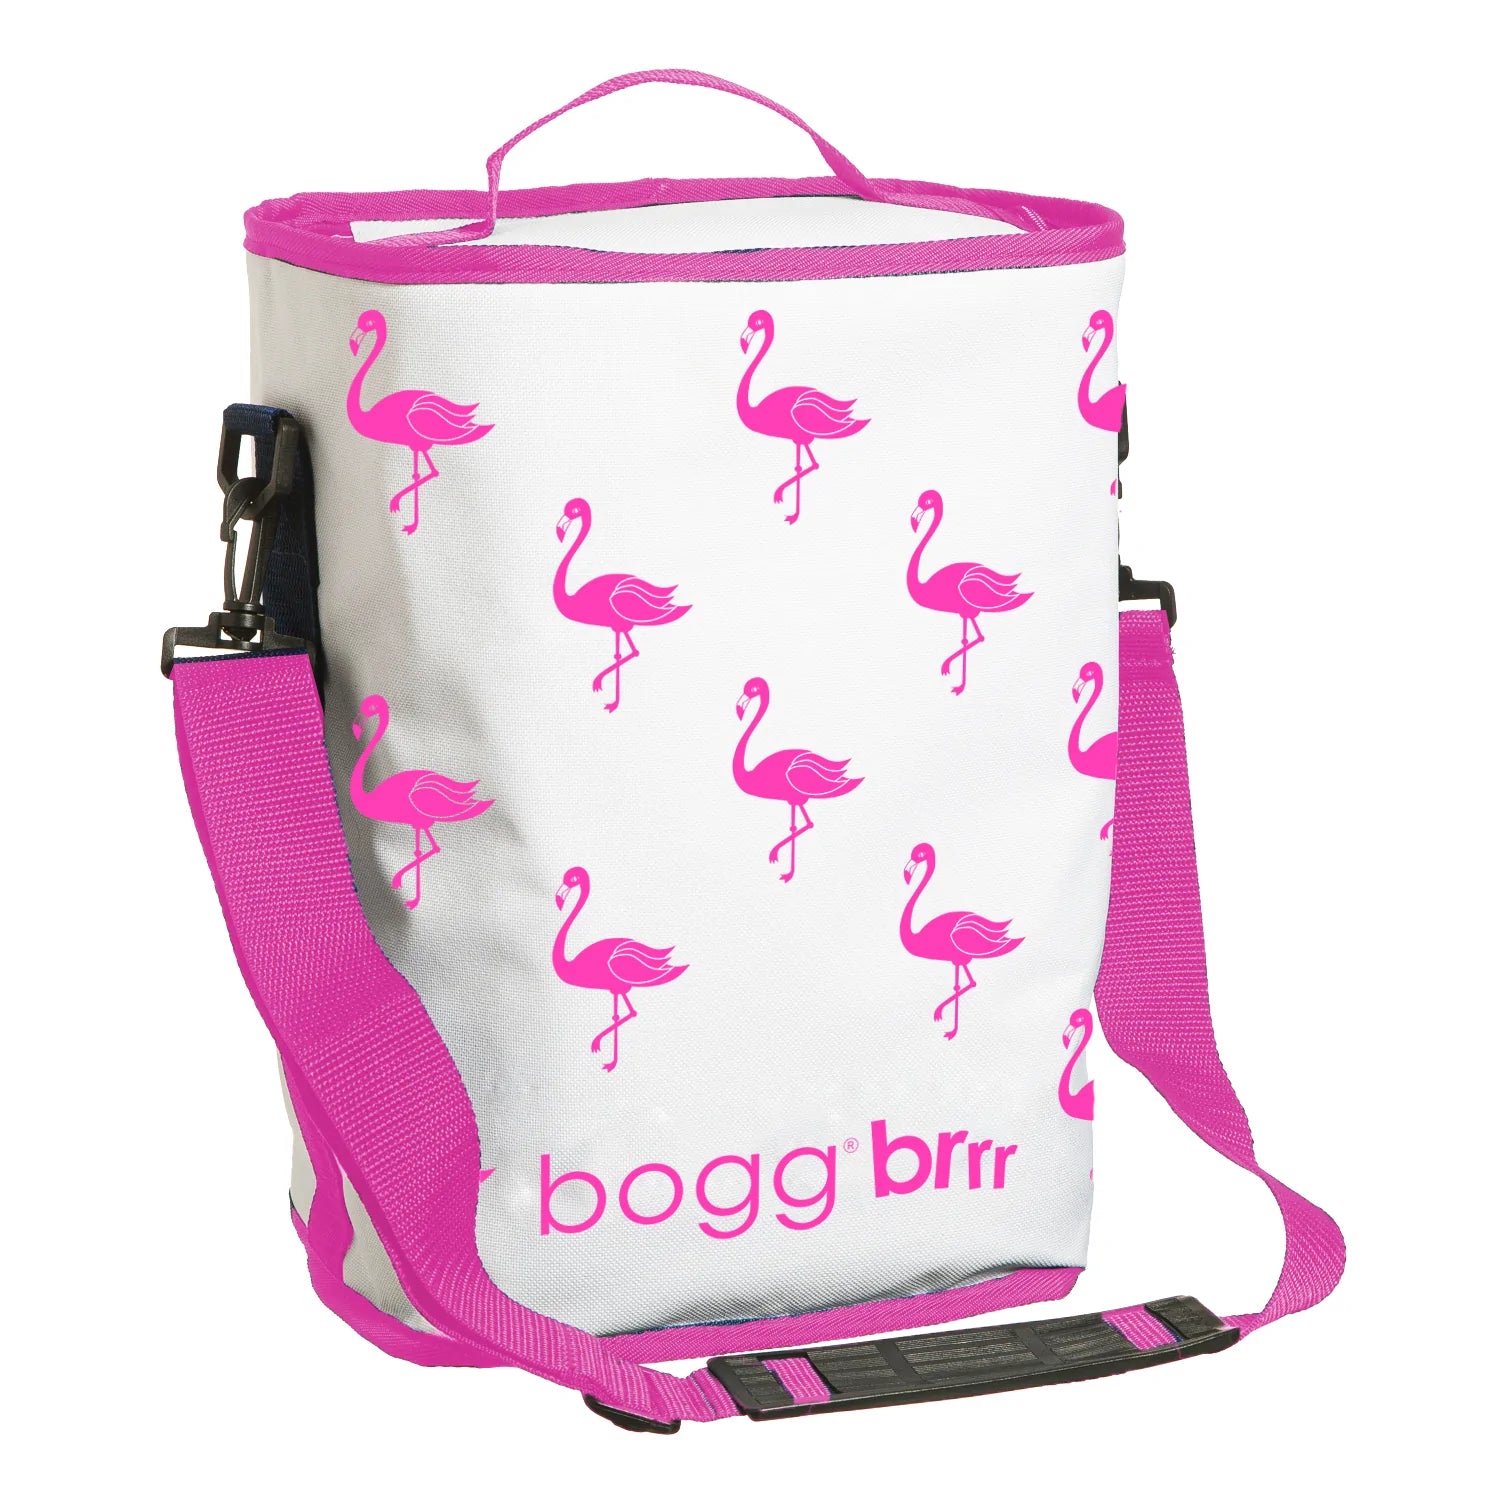 Bogg Bags Small Baby Bogg Bag - Tiffany Blue $ 69.95